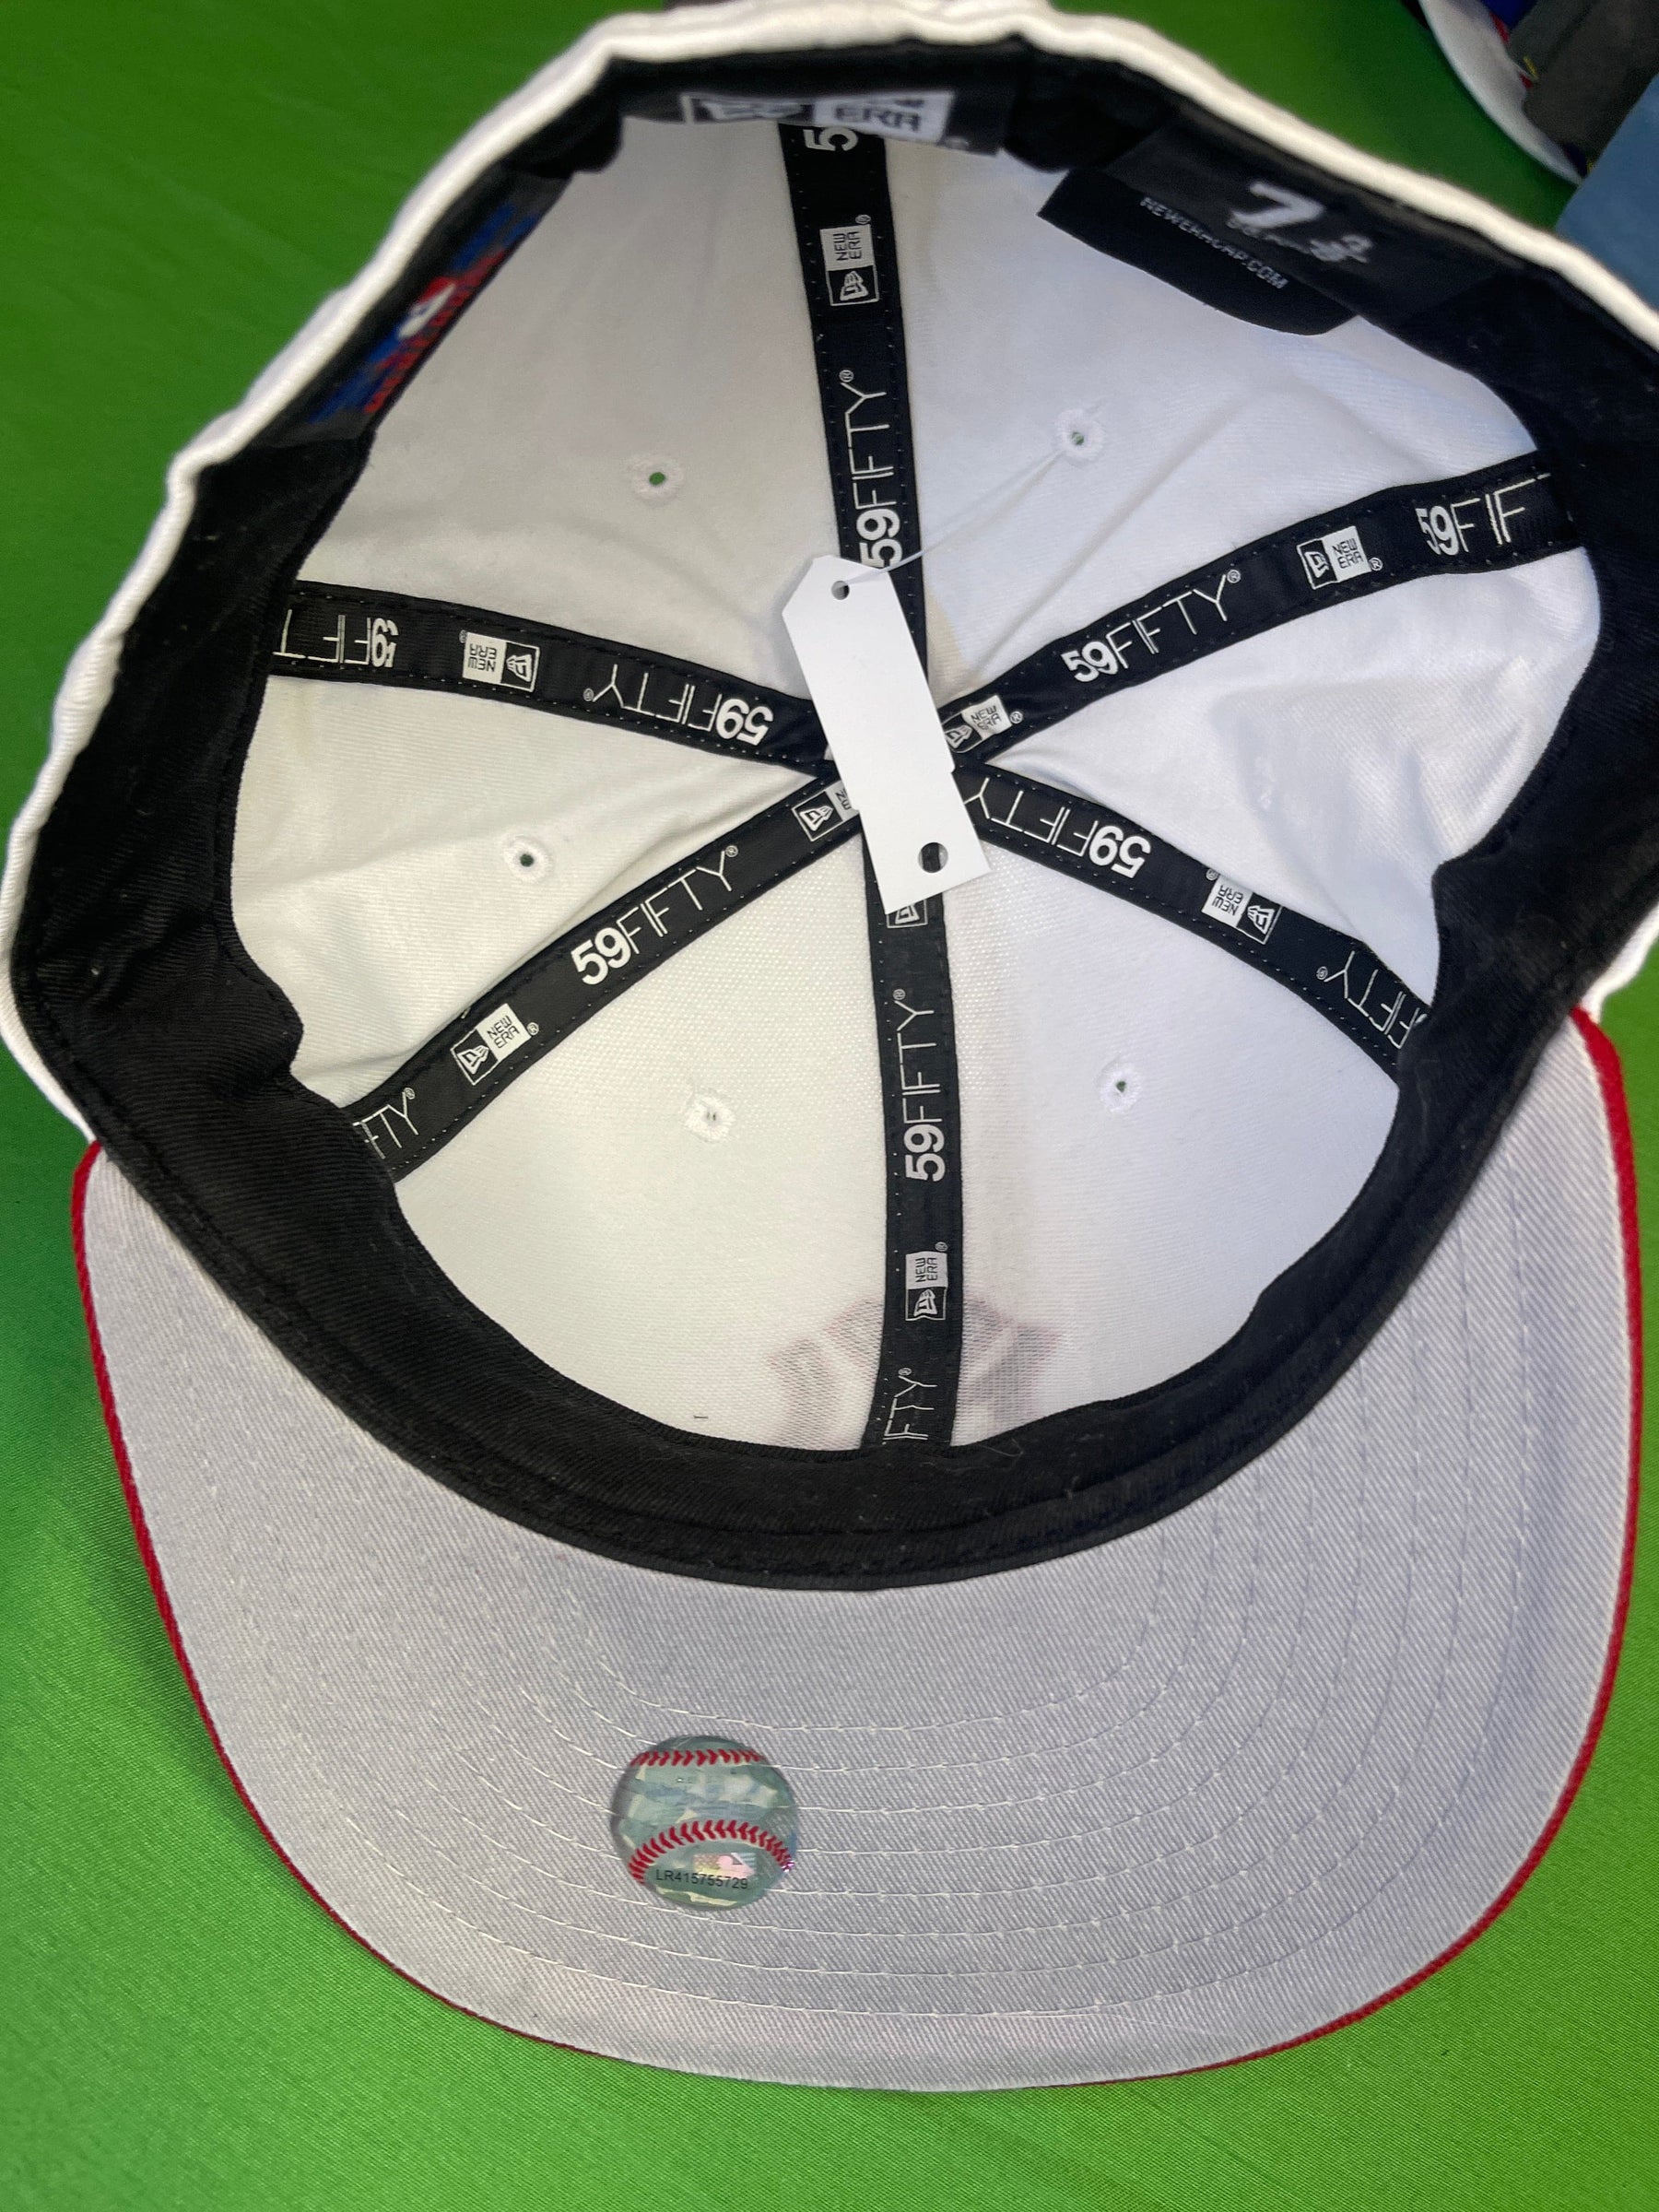 MLB New York Yankees New Era 59FIFTY Cap/Hat Red /White Size 7-3/8